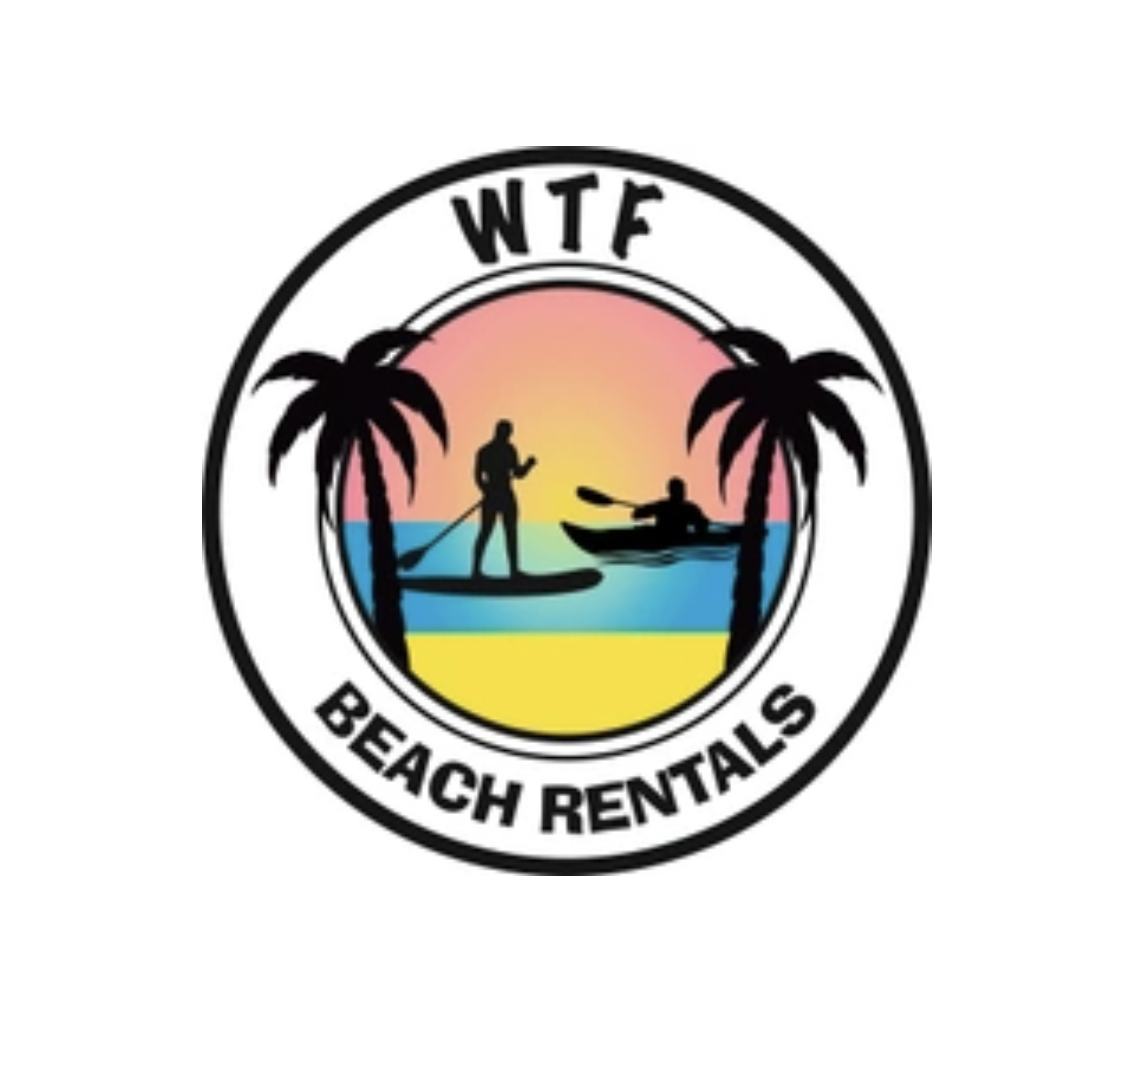 WTF Beach Rentals